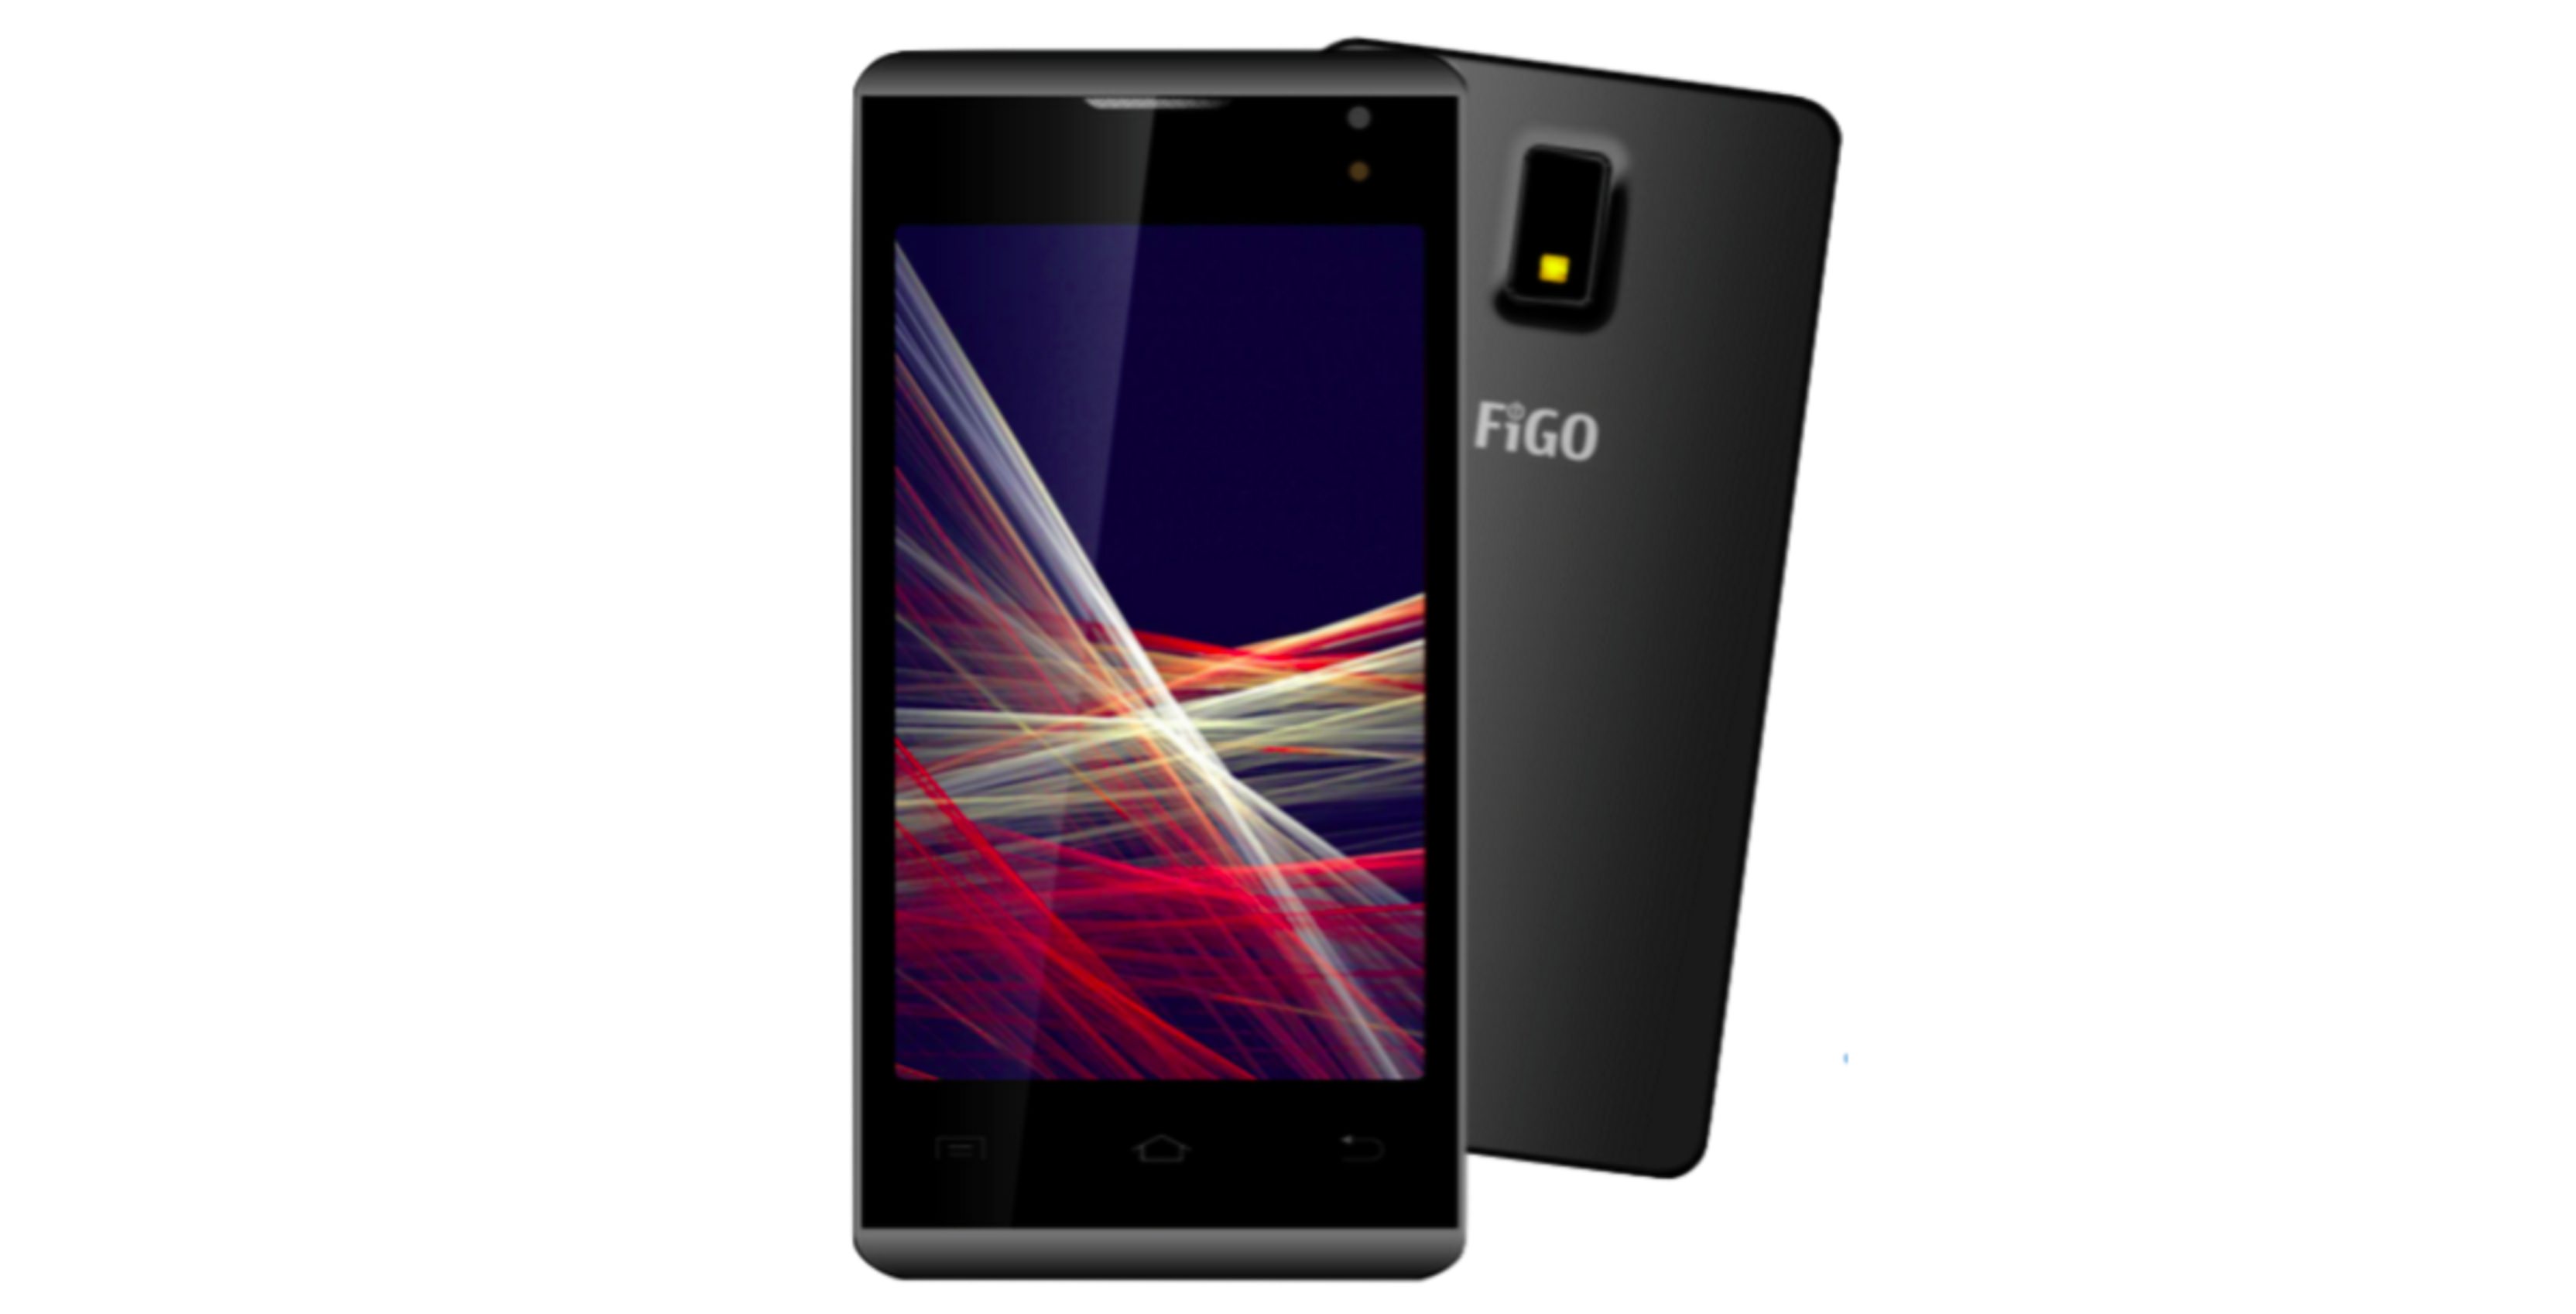 FiGO Virtue III smartphone